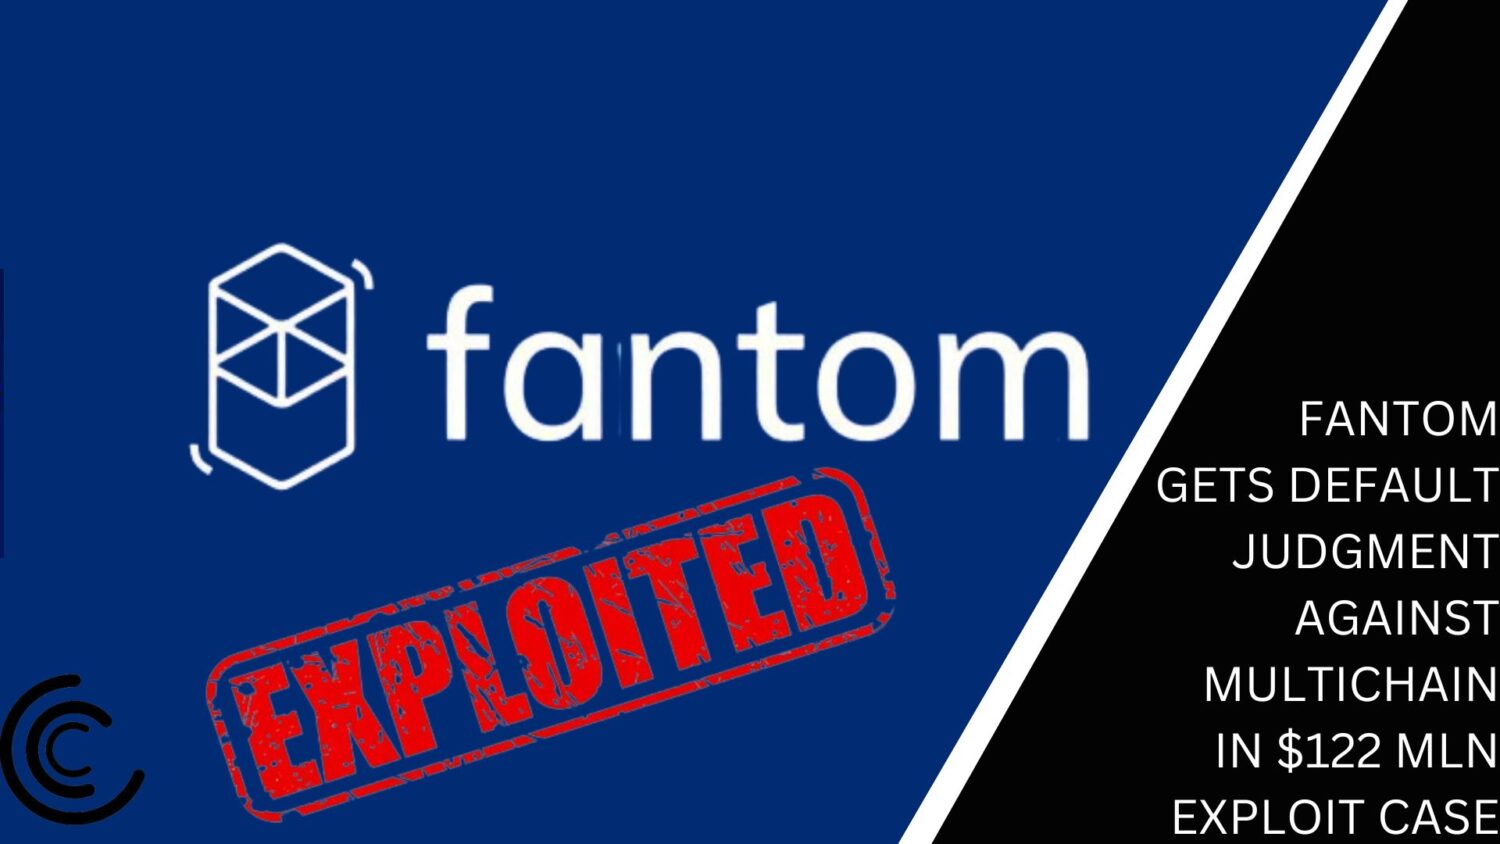 Fantom Foundation Secures Default Judgment In Against Multichain In $122 Mln Exploit Case